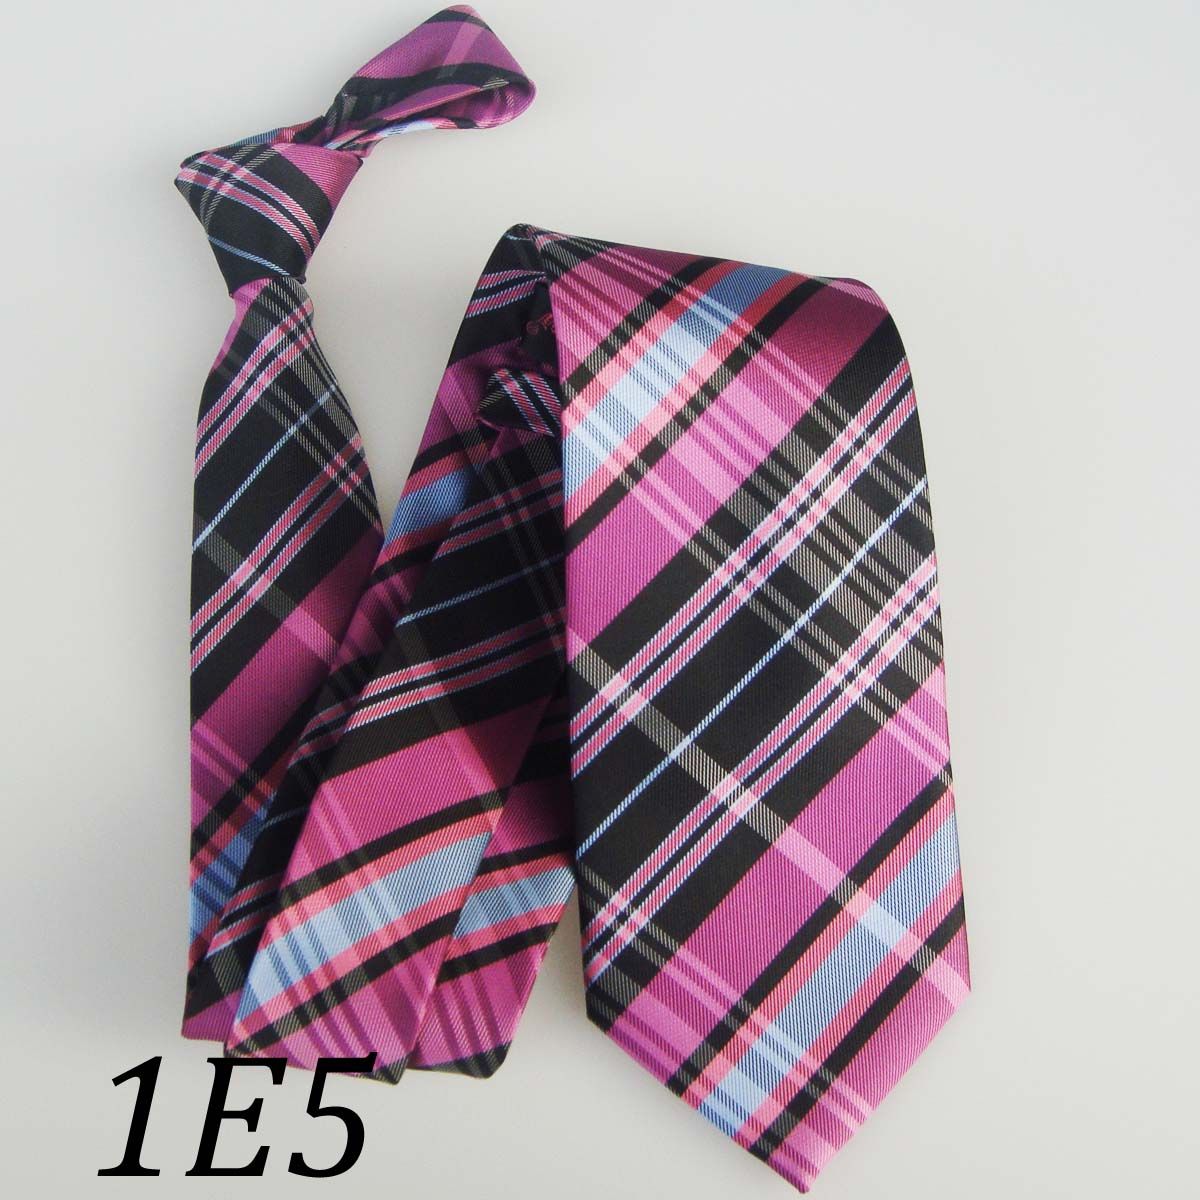 Corbatas de hombre Fronteriza Negro / fucsia / / plata rejilla Corbata rayada gravata Mejores Corbatas para hombres